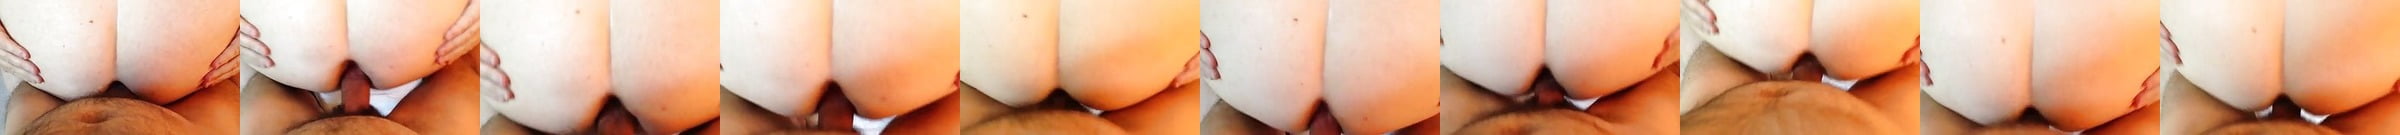 Vidéos Porno Bareback Closeup Gay Durée En Vedette Xhamster